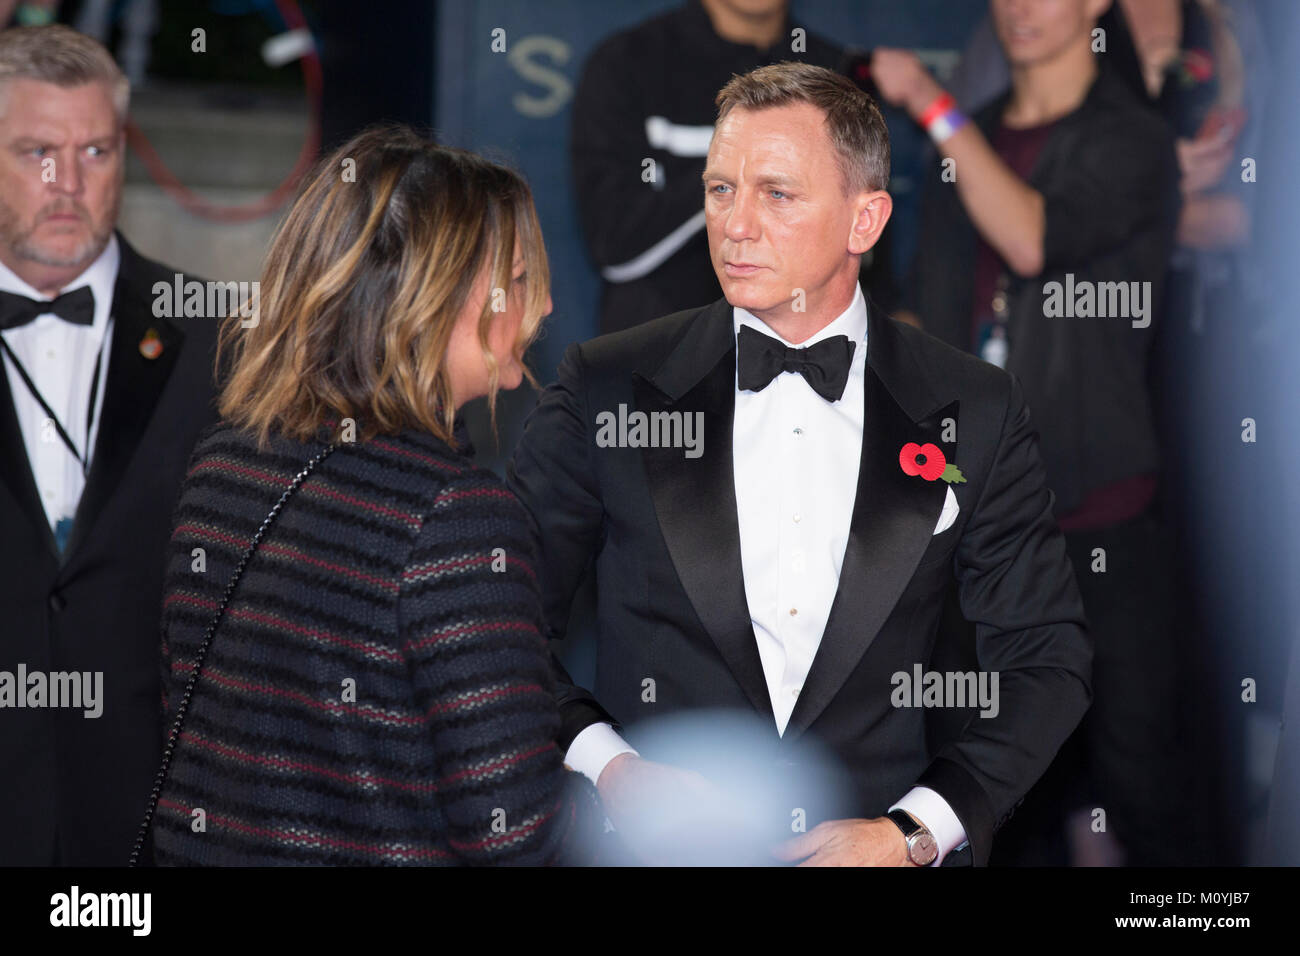 Londra, UK, 26 ottobre 2015, Daniel Craig assiste la premiere mondiale di 'Spectre' presso la Royal Albert Hall. Mariusz Goslicki/Alamy Foto Stock